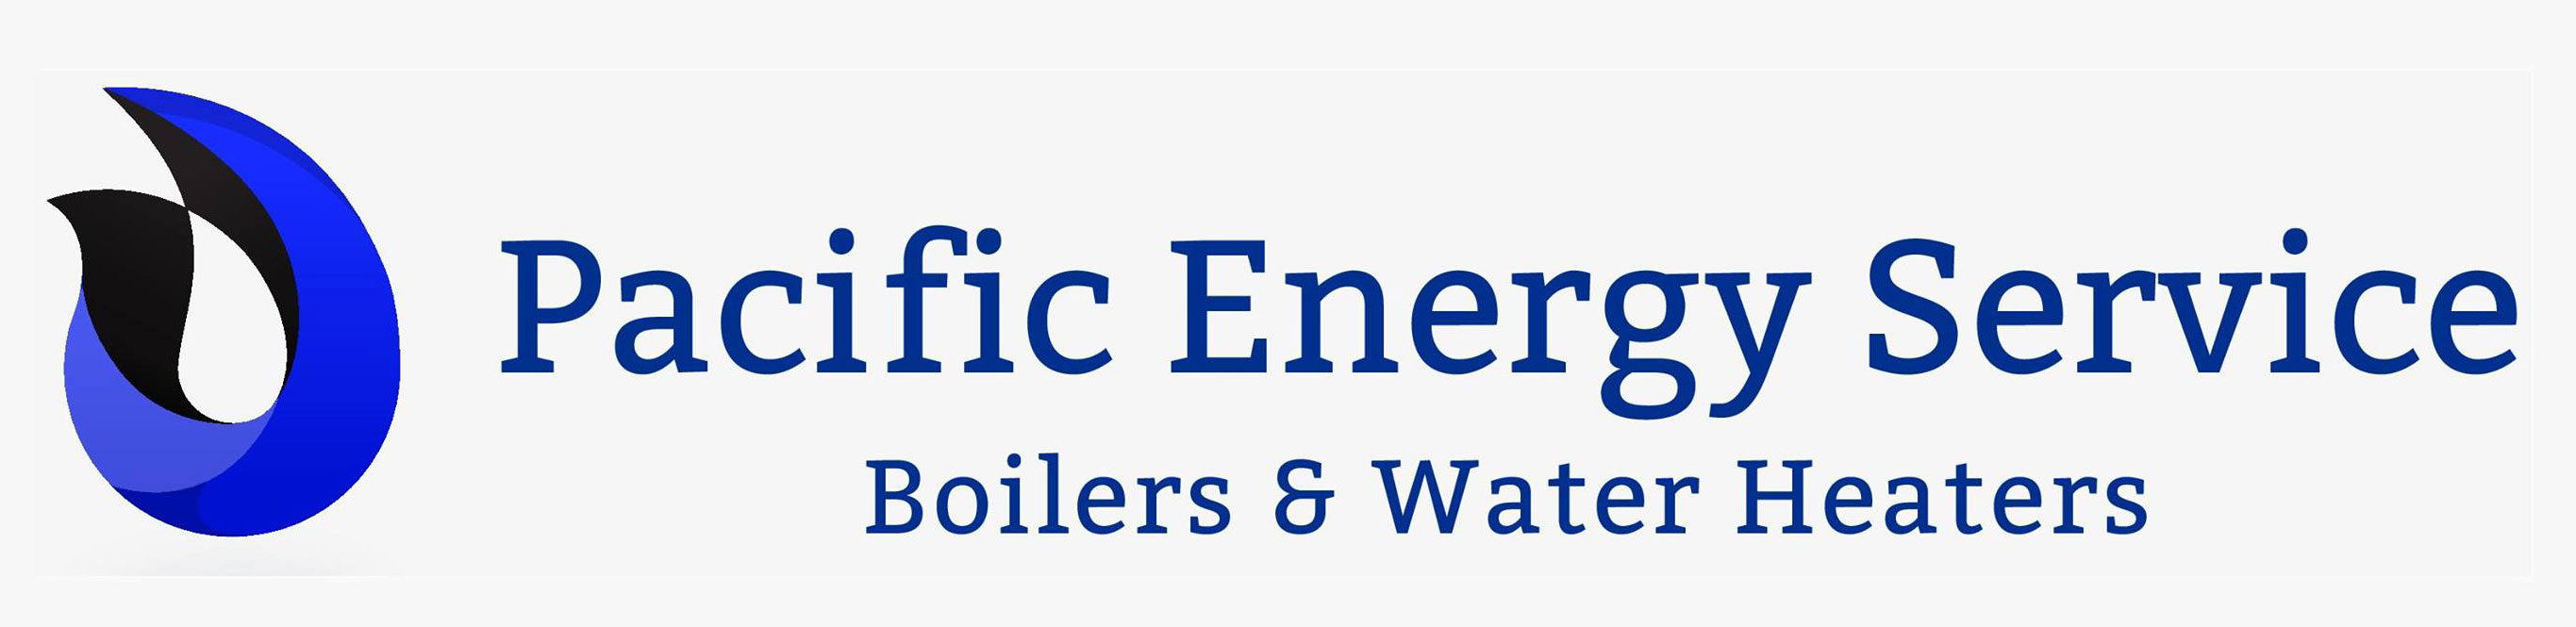 Pacific Energy Service